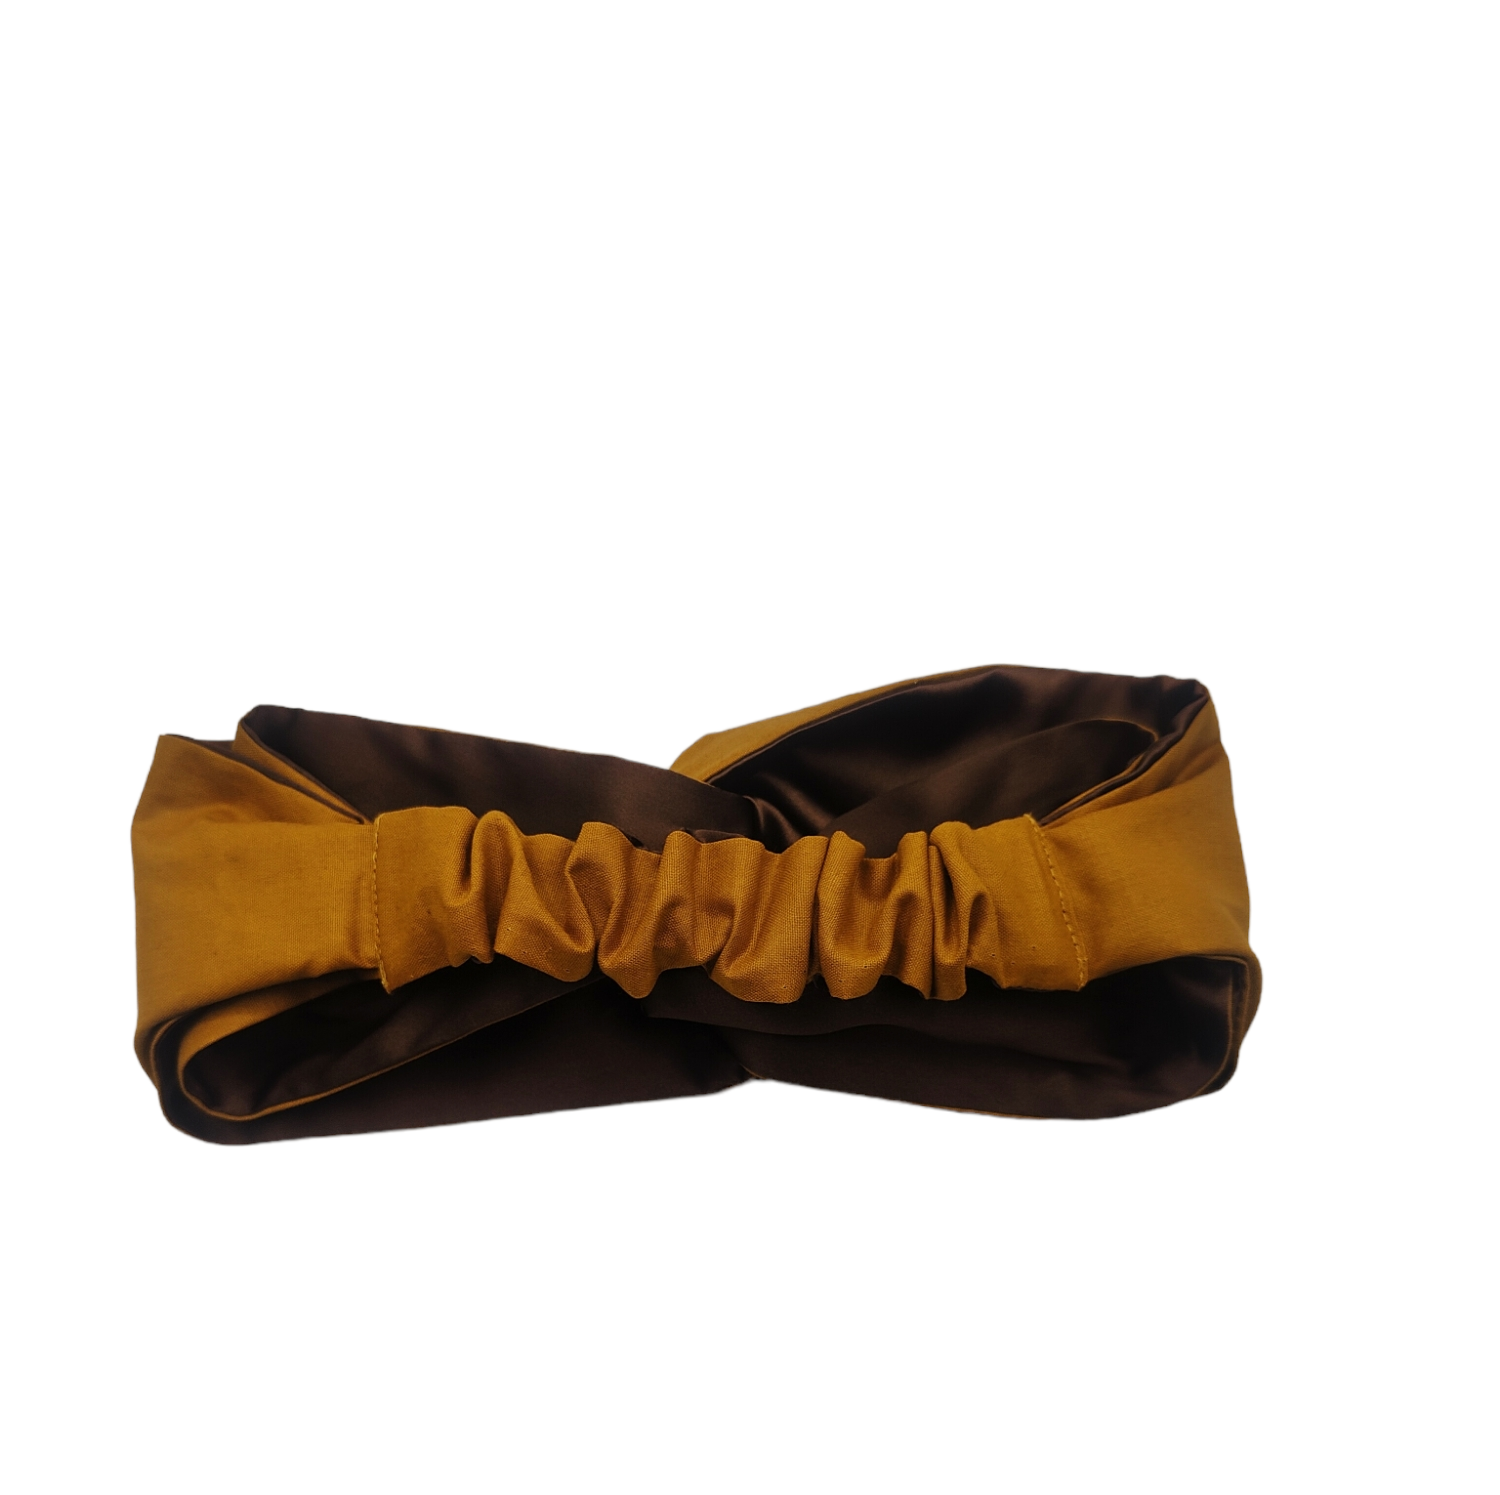 EWURASIKA silk lined headband